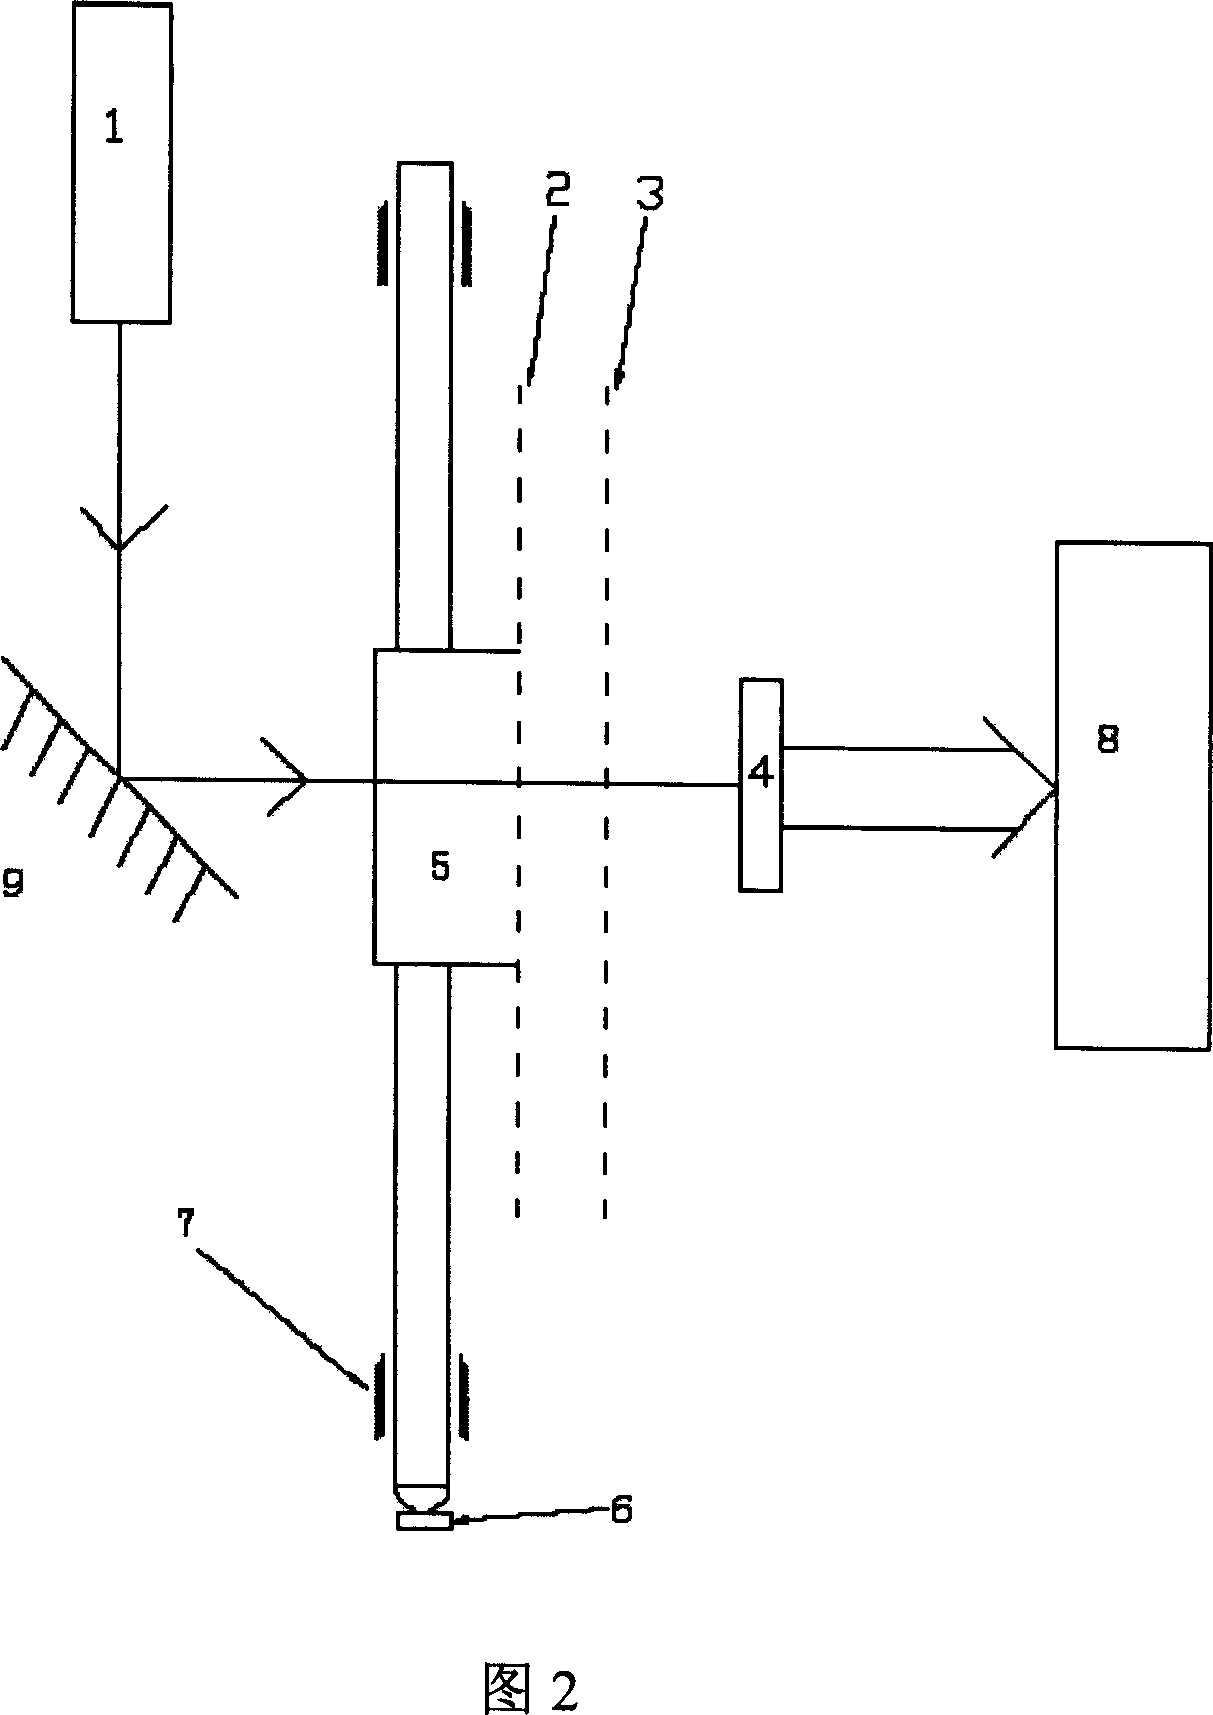 Double-raster displacement sensor